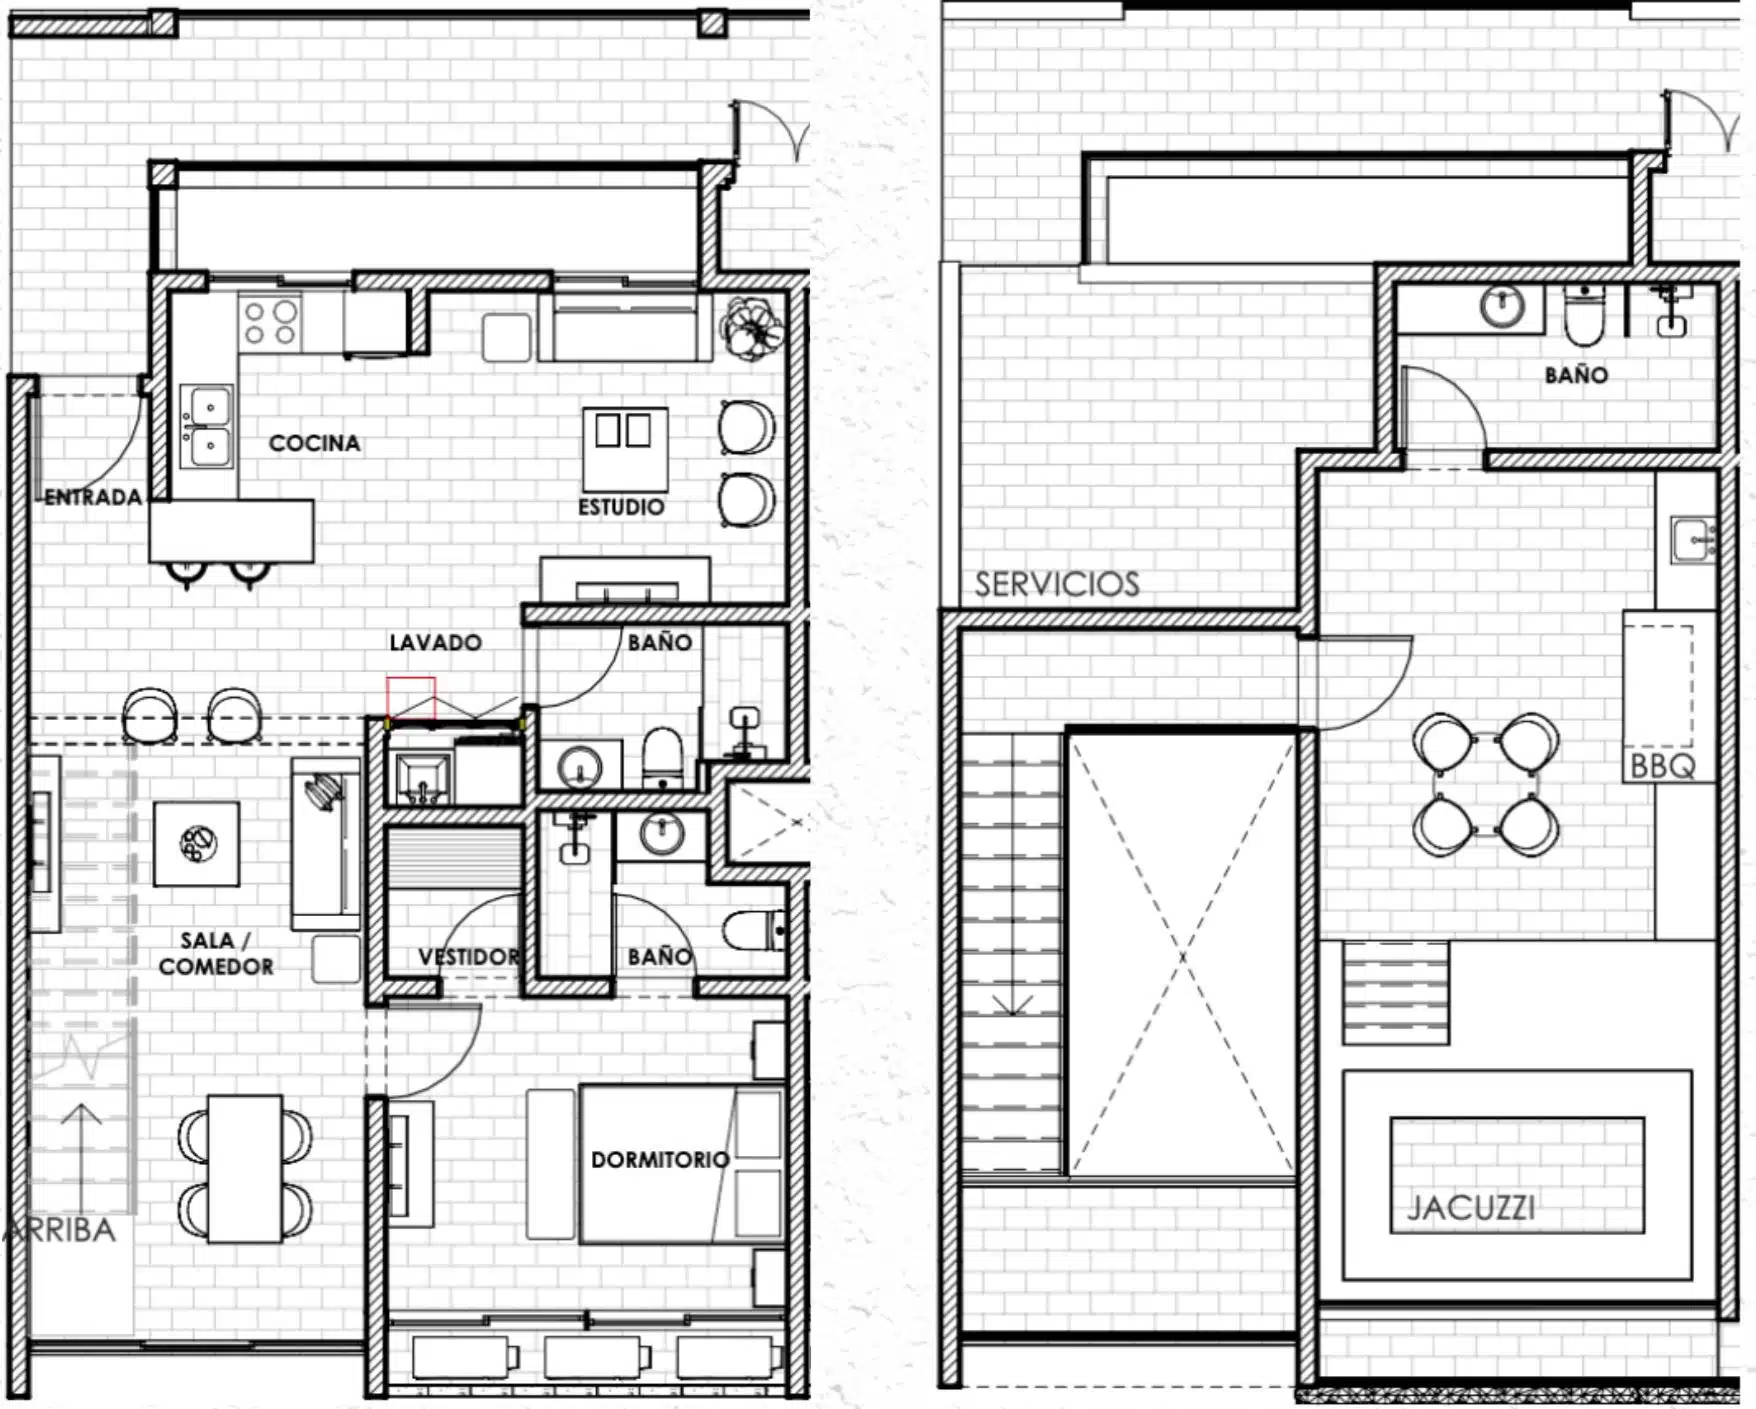 Level 4 Units (Penthouses) Plan